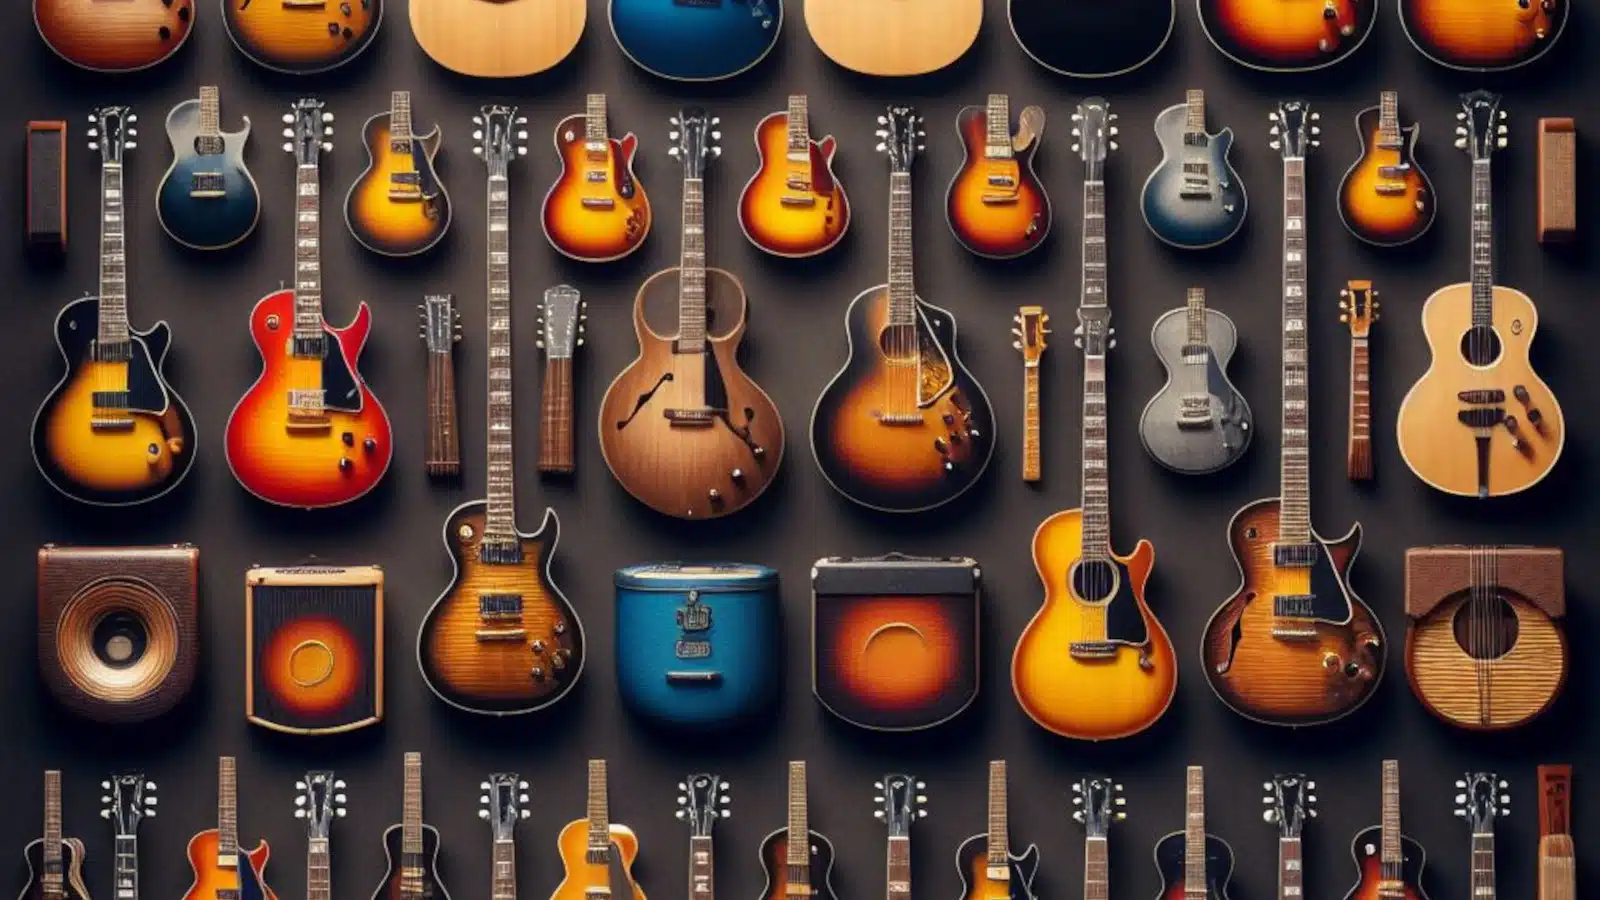 Gibson Guitars